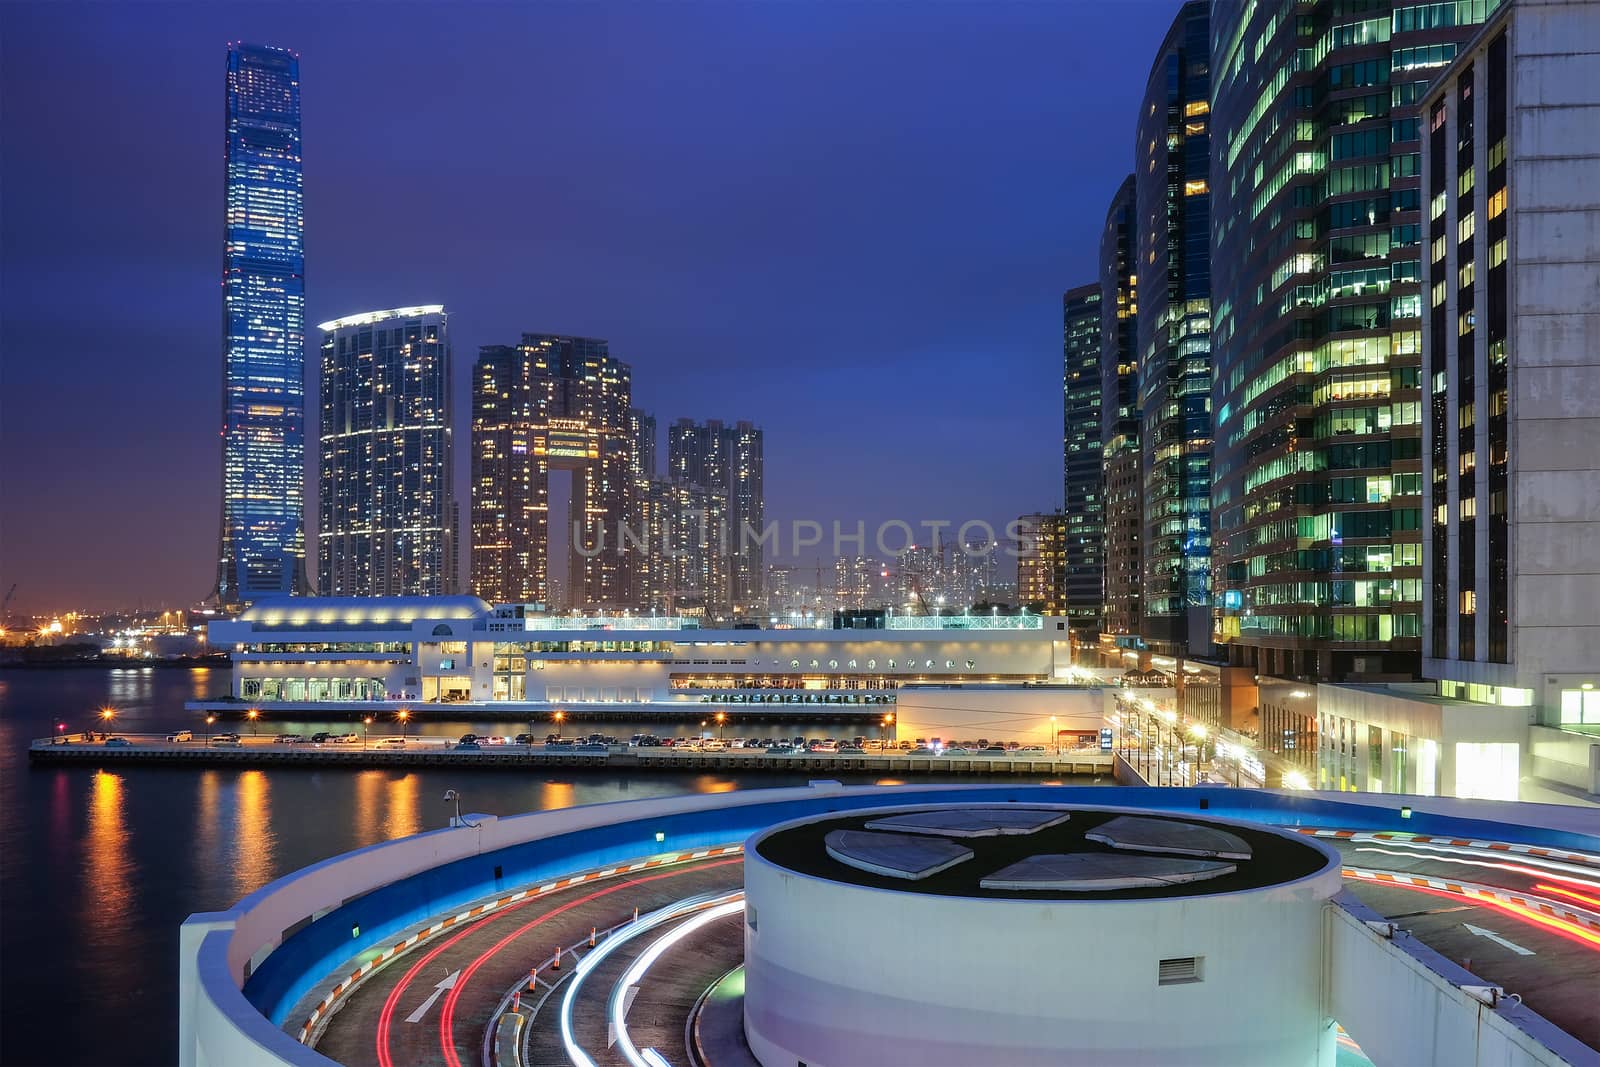 Night view traffic in Hong Kong at twiligth time by Surasak